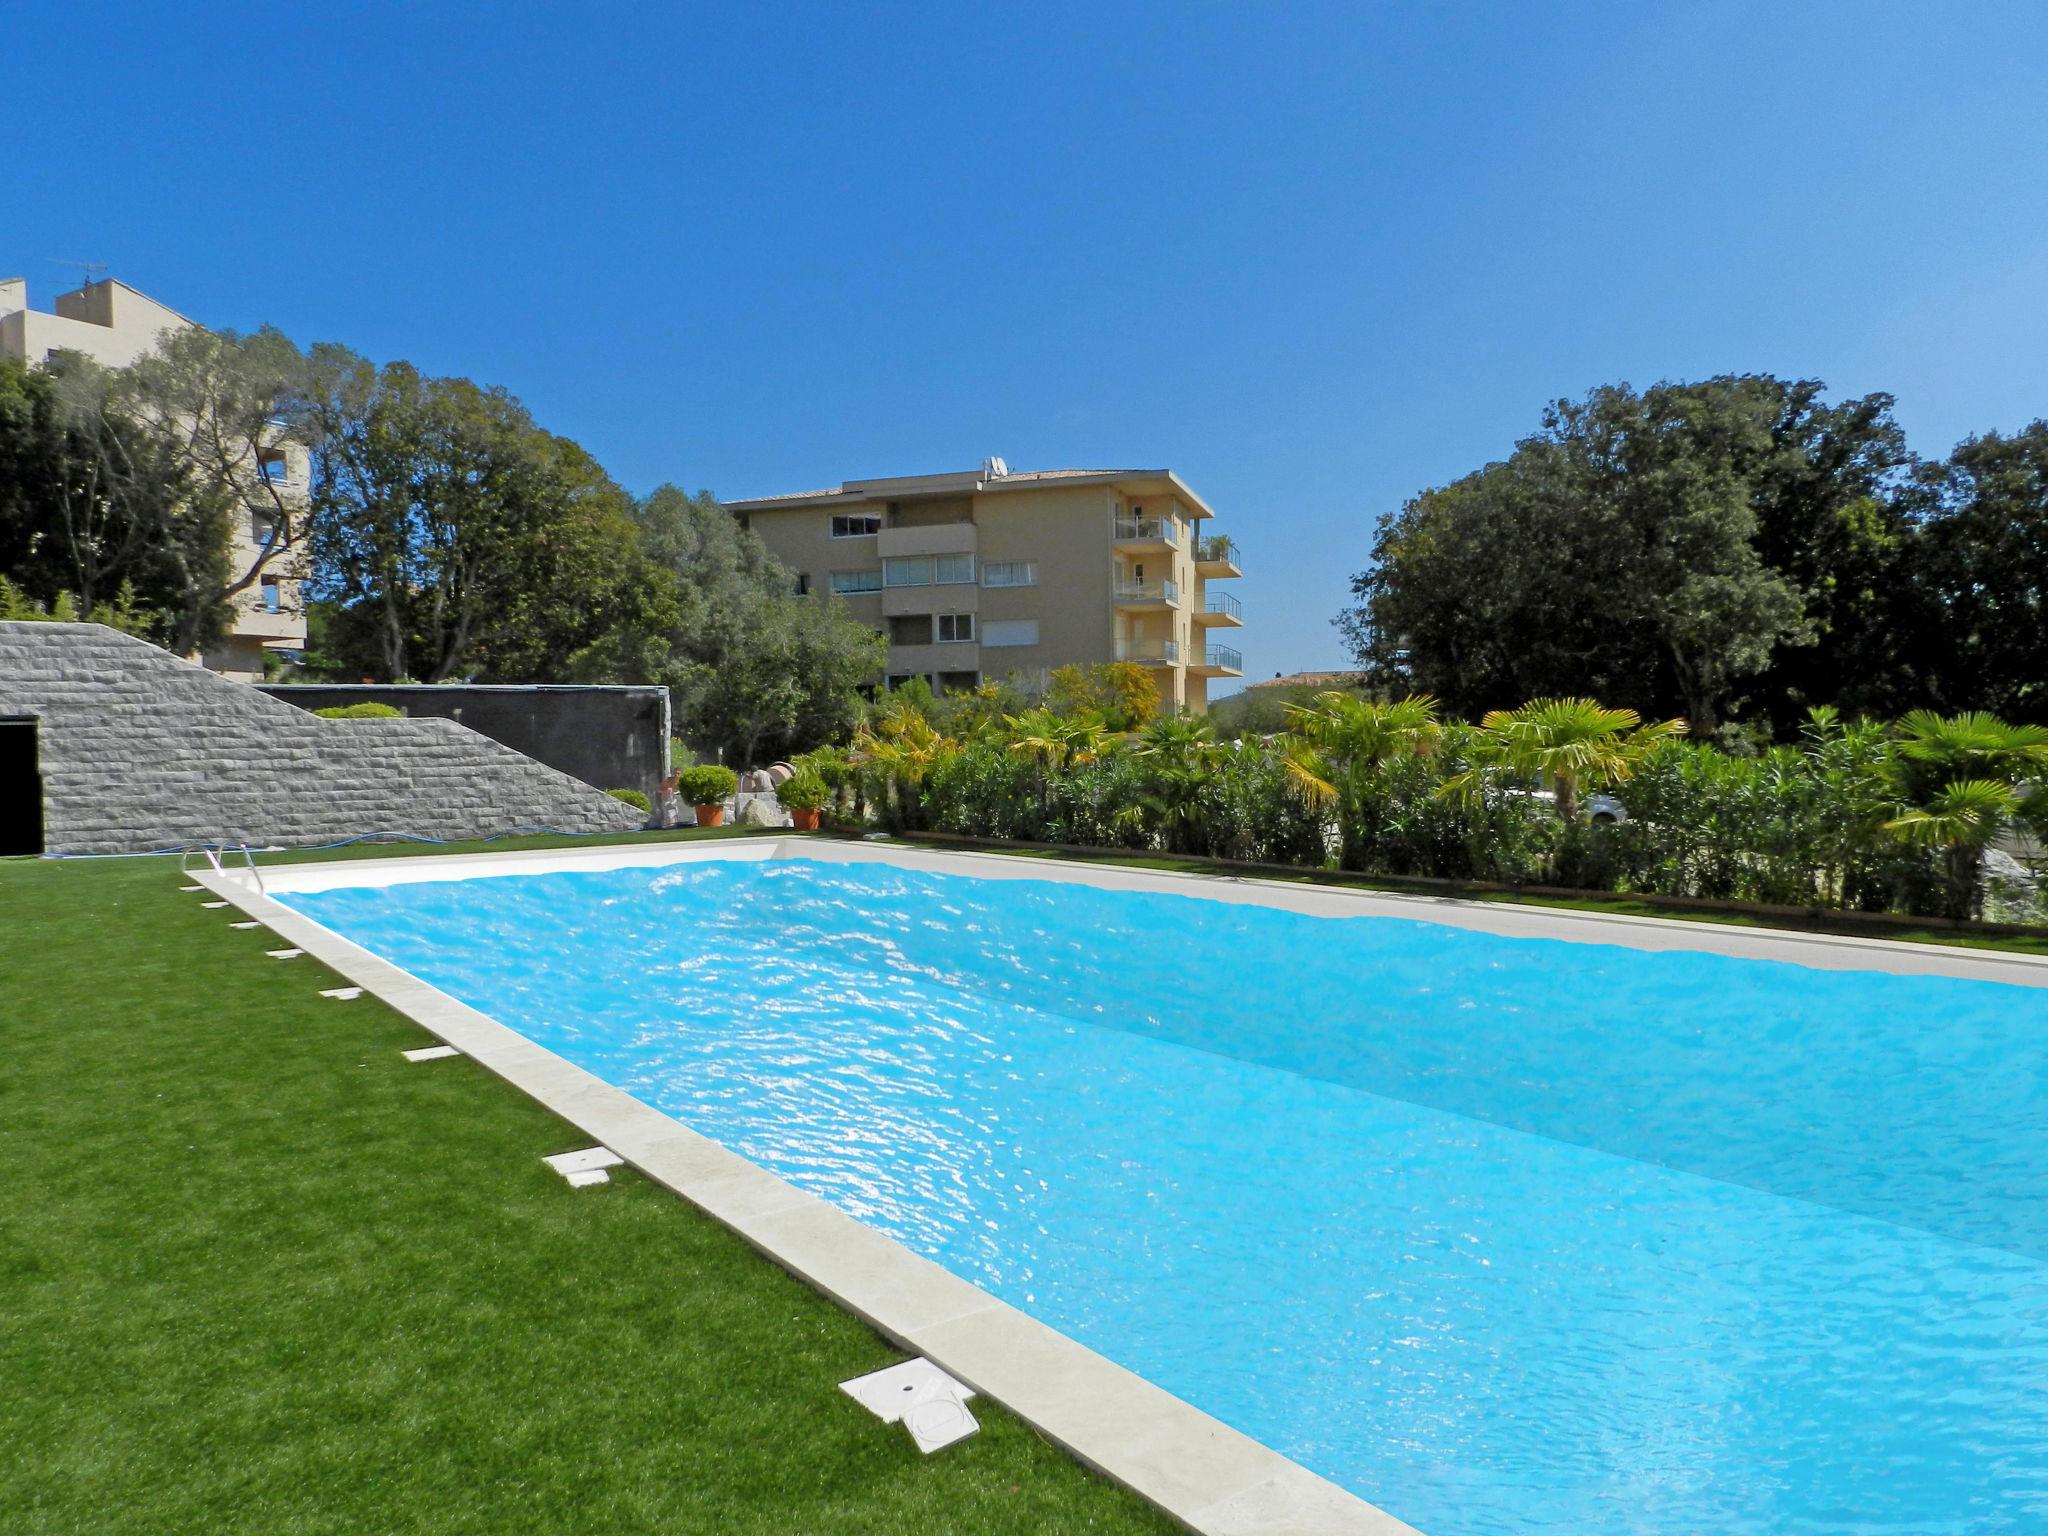 Foto 1 - Apartment in Porto-Vecchio mit schwimmbad und blick aufs meer